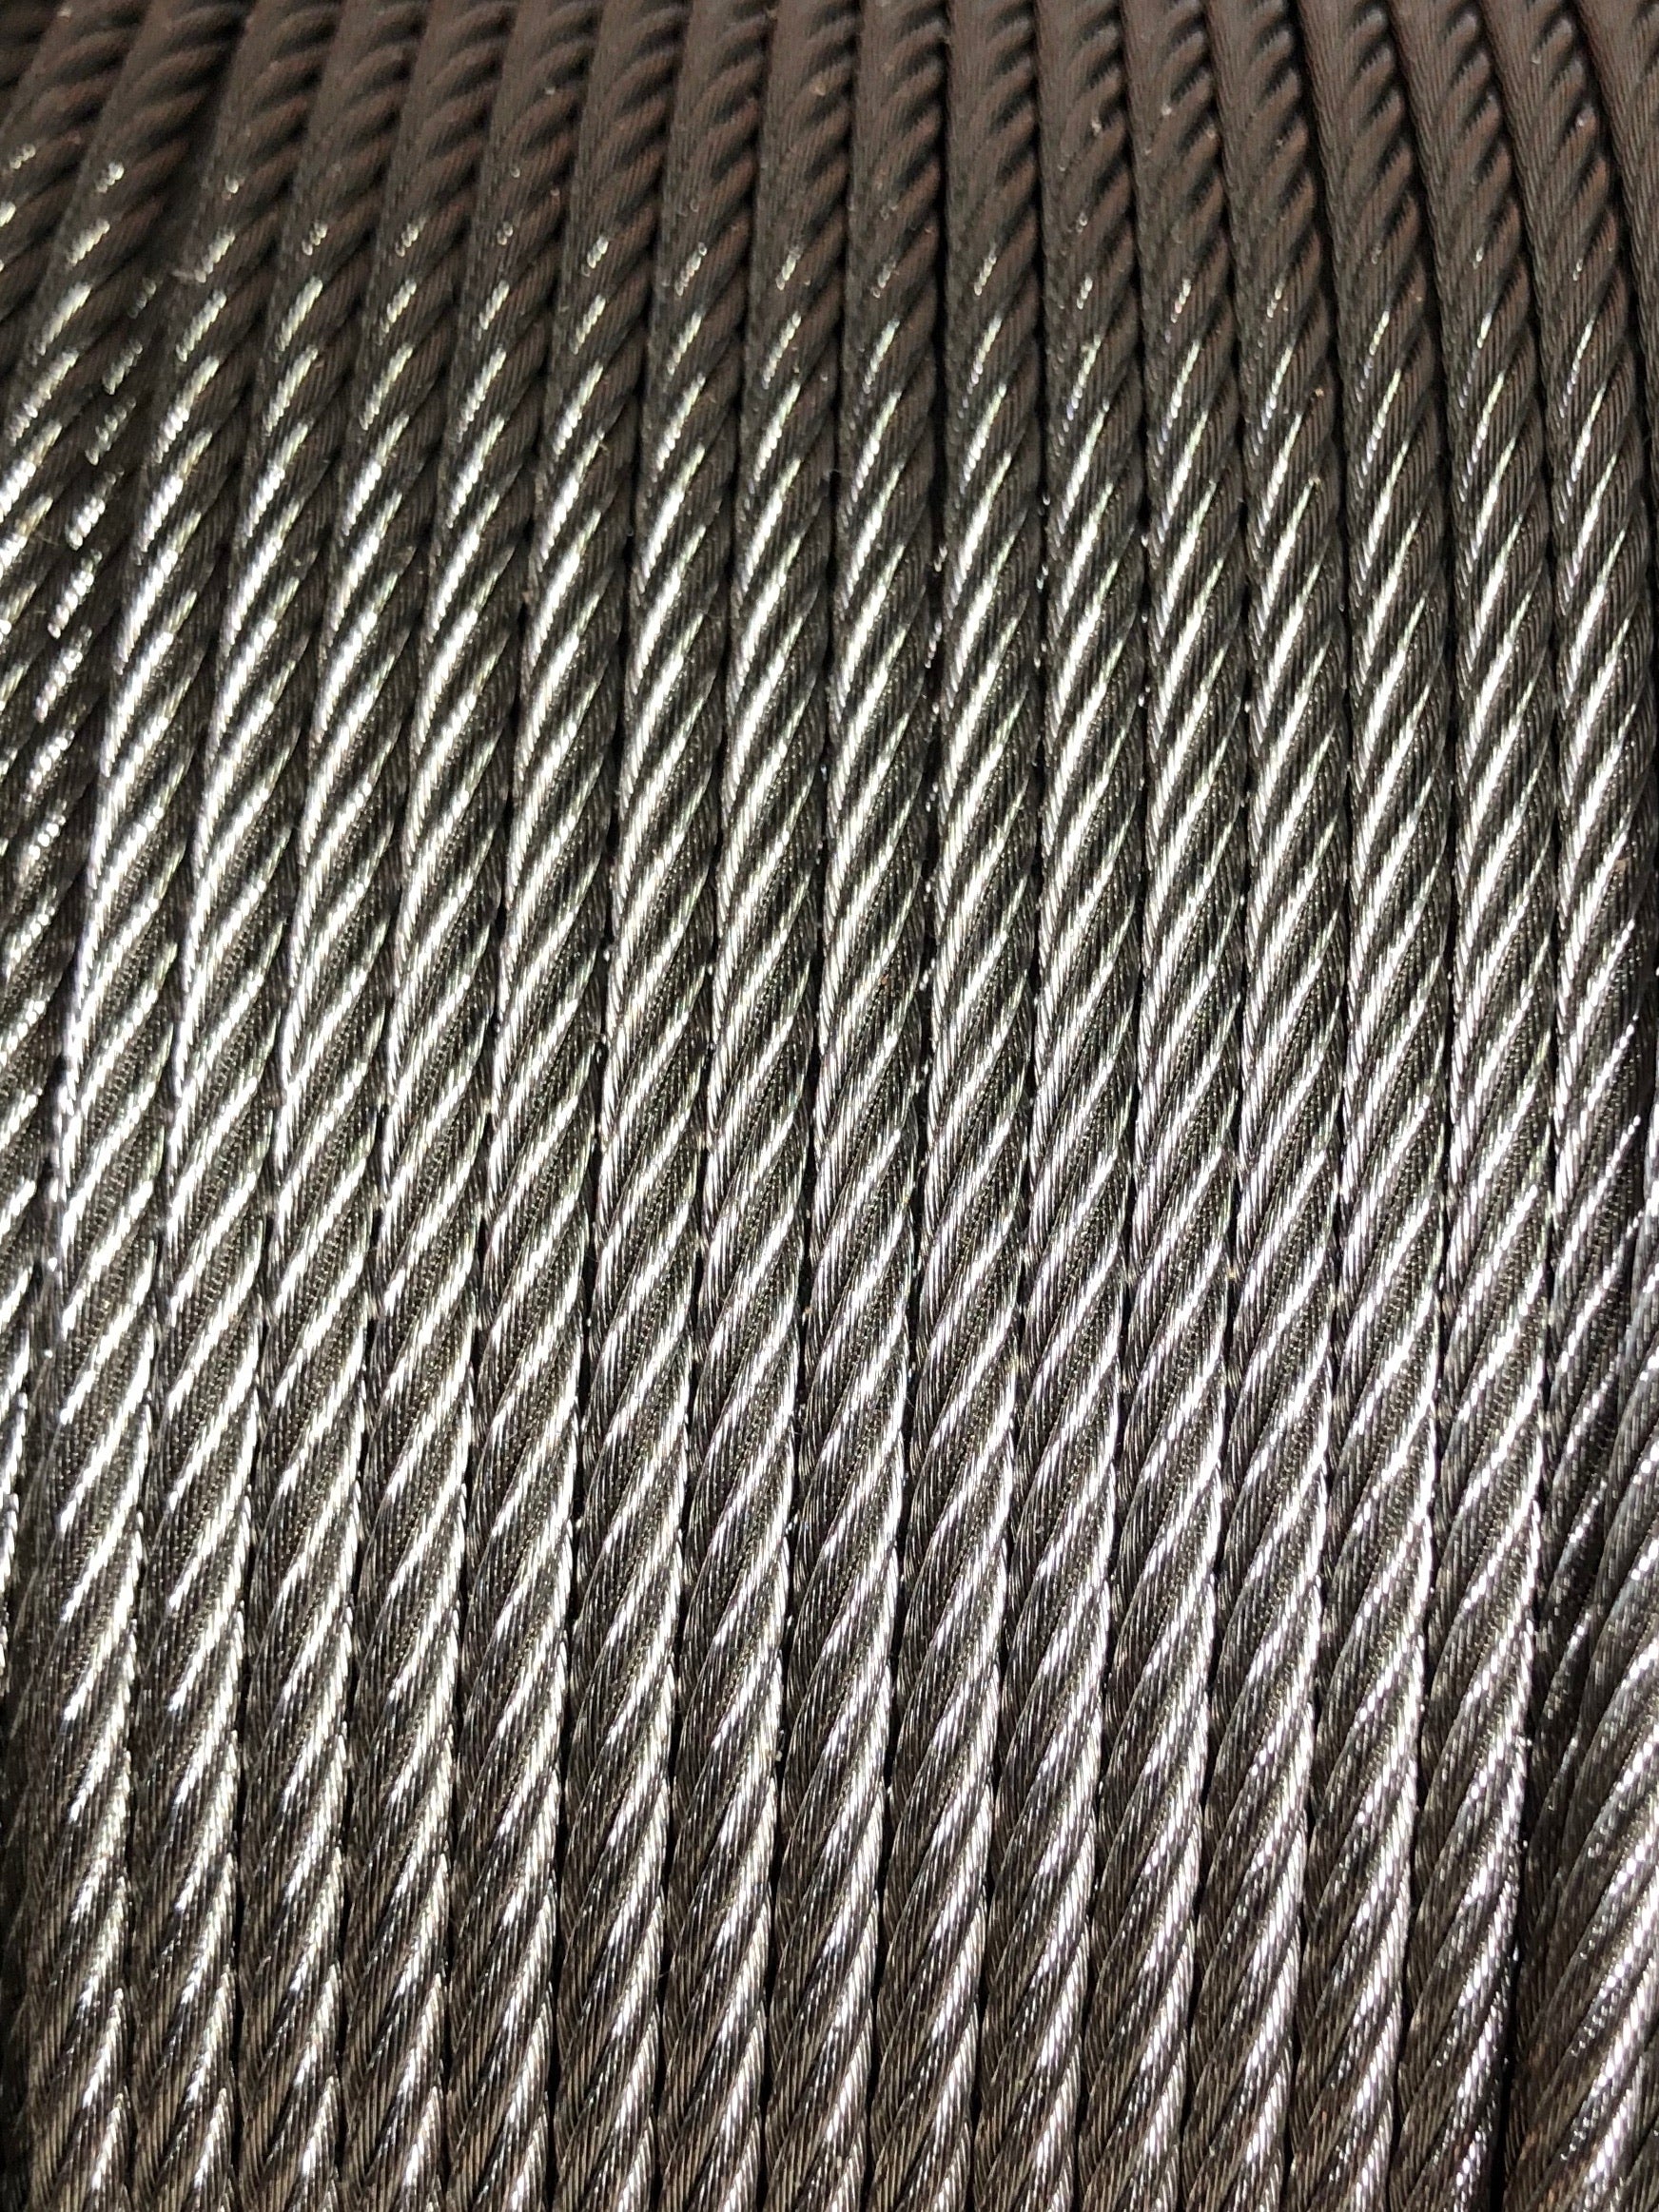 Stainless Steel 304 #10 Woven Wire Mesh (15.24m x 1.22m) - Locker Wire Mesh